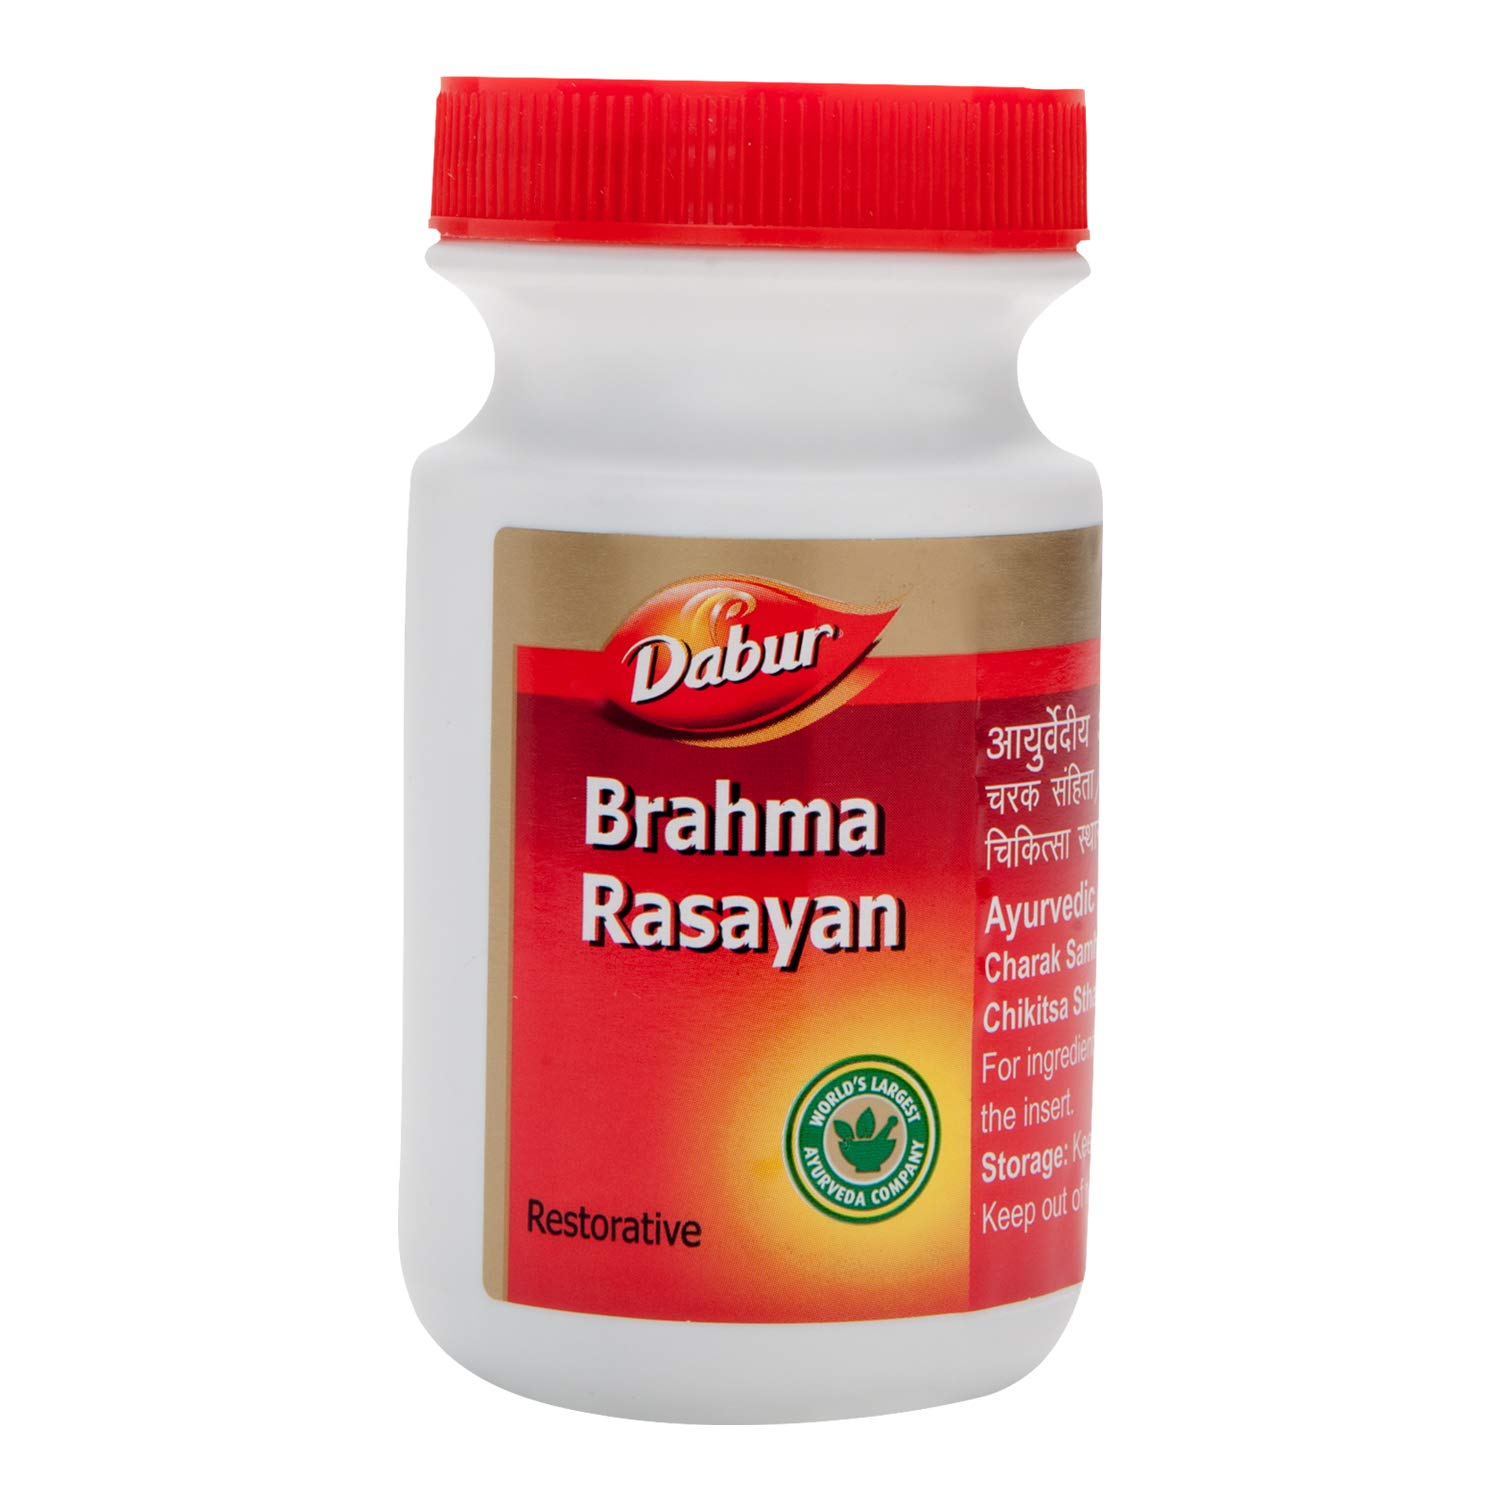 https://healthygk.com/wp-content/uploads/2022/06/dabur-brahm-rasayan.jpg